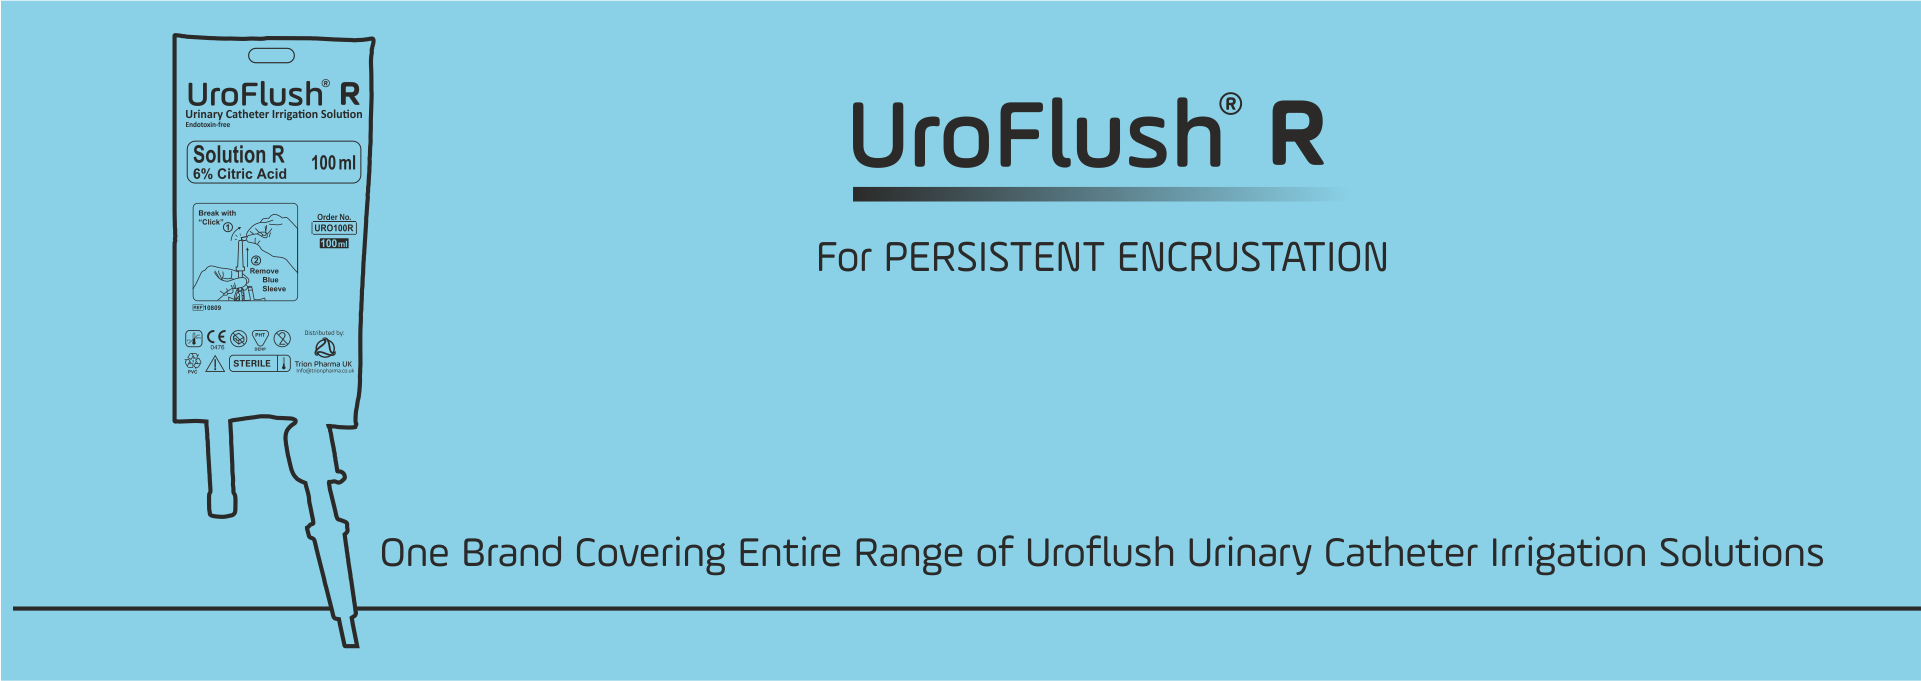 UroFlush Solution R